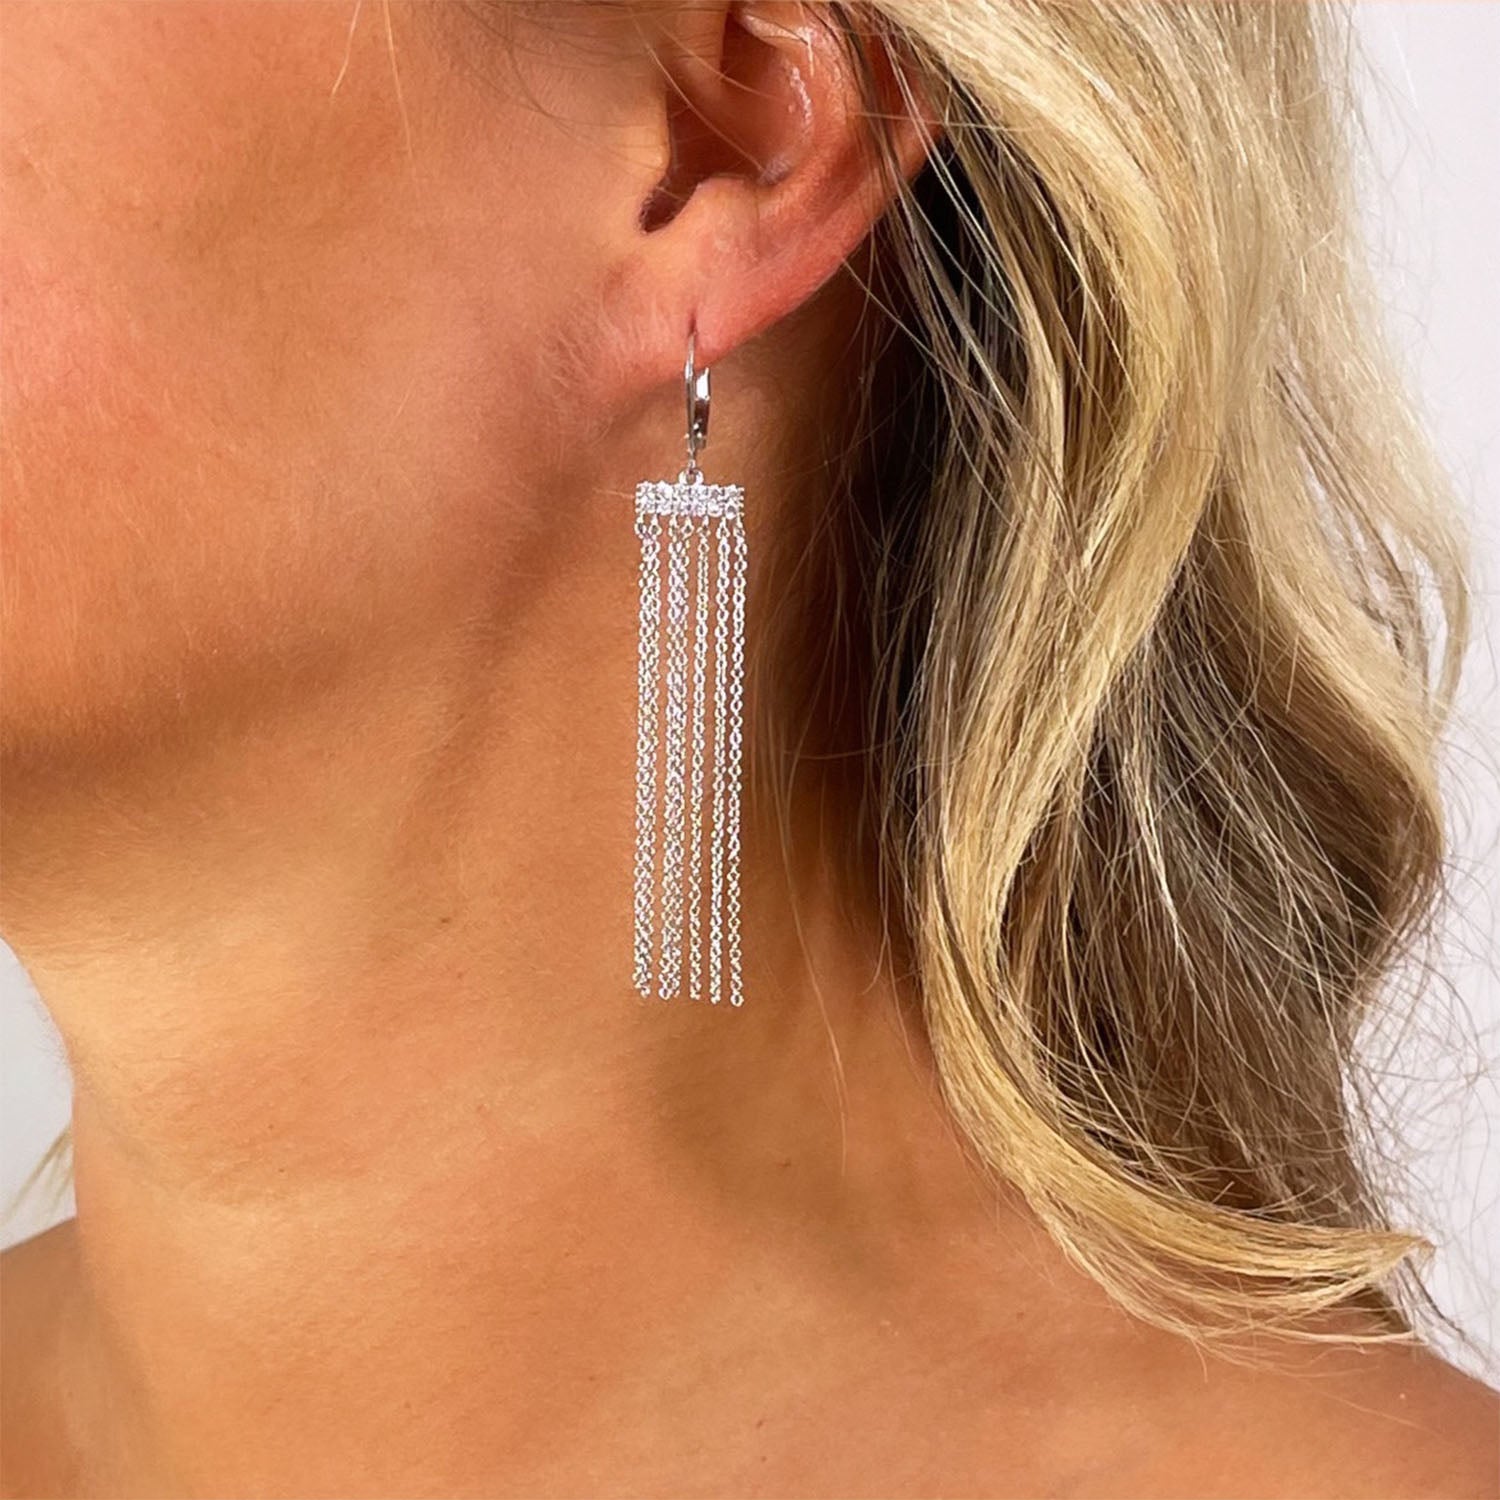 Mari Fringe Tassel Earrings with CZ Pave Diamonds, Silver - Zahra Jewelry